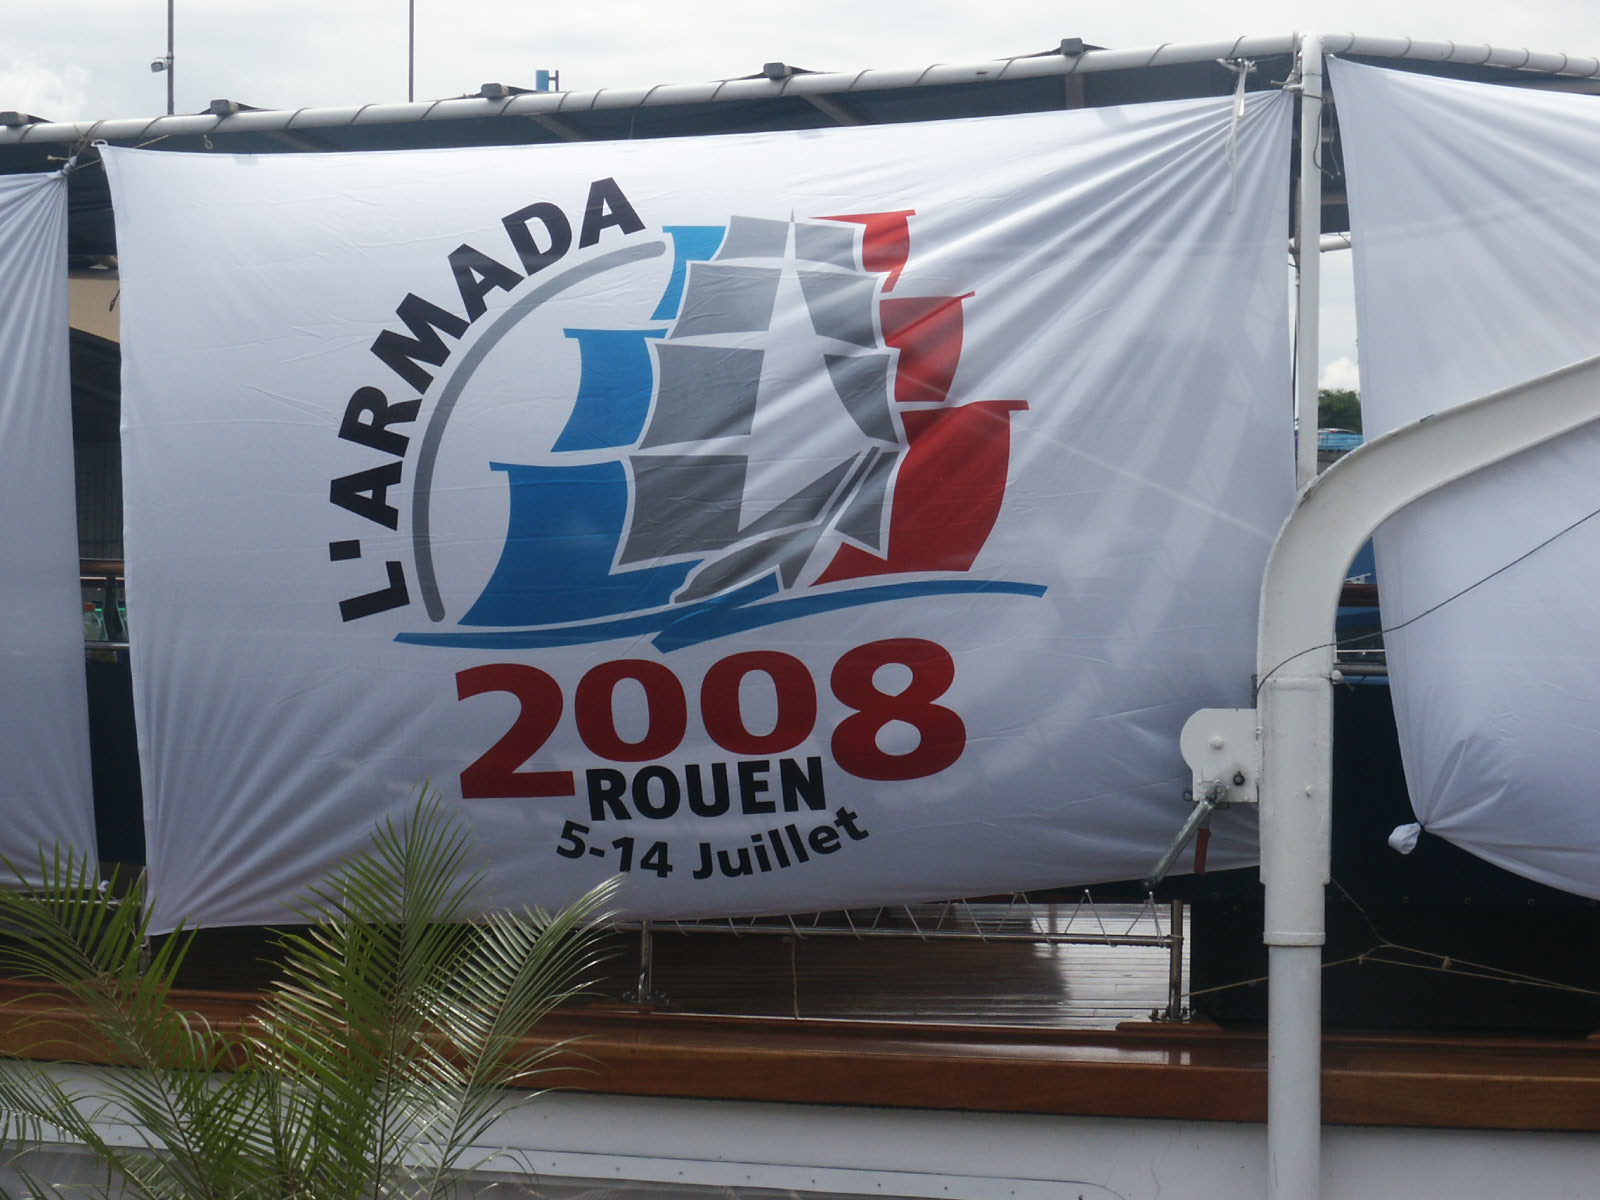 armada 2008 logo.JPG